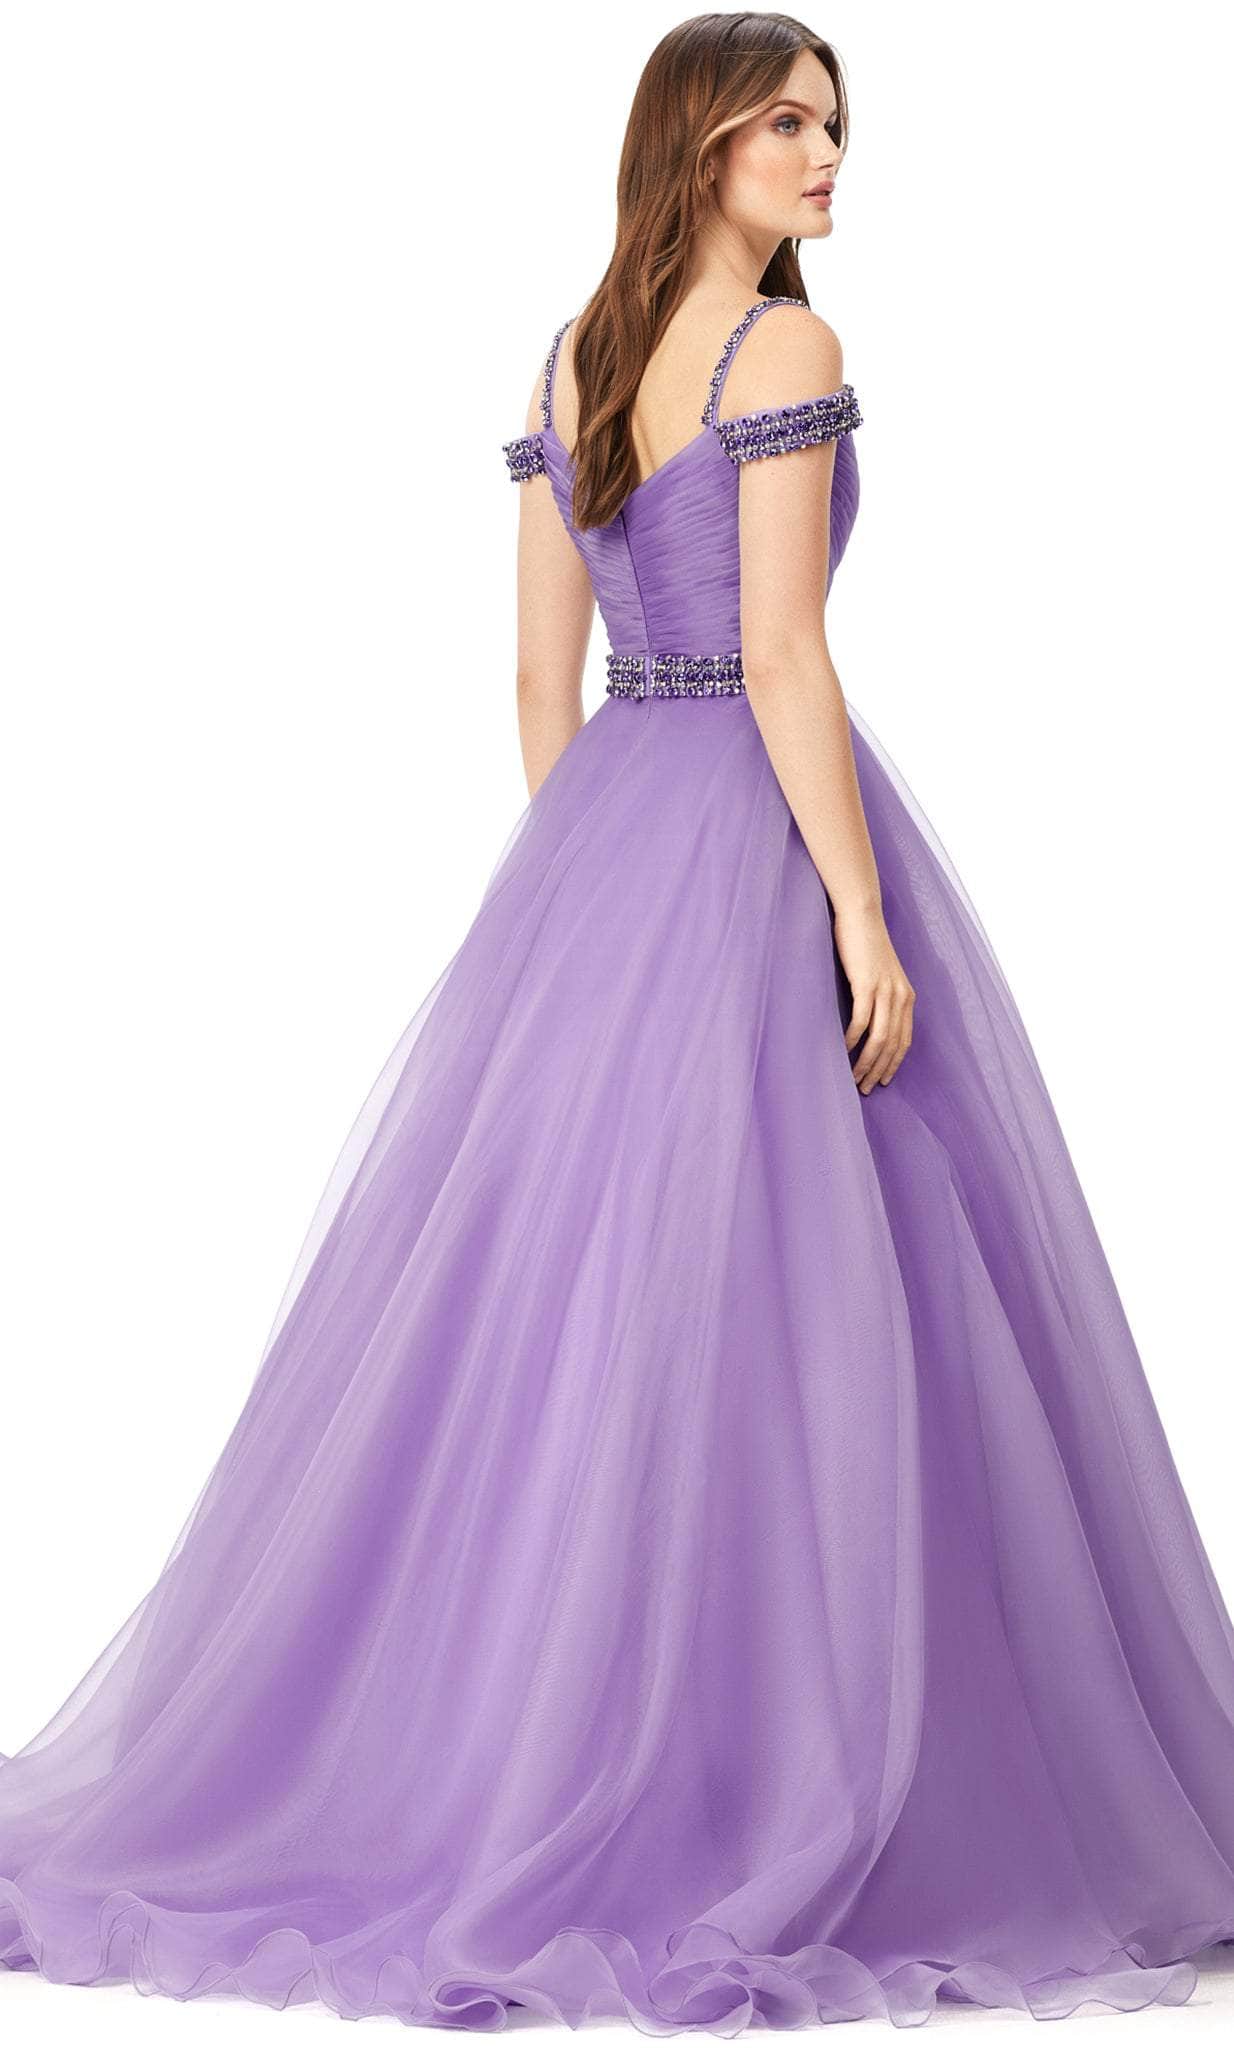 Ashley Lauren 11221 - Off-Shoulder Sweetheart Neck Ballgown Special Occasion Dress